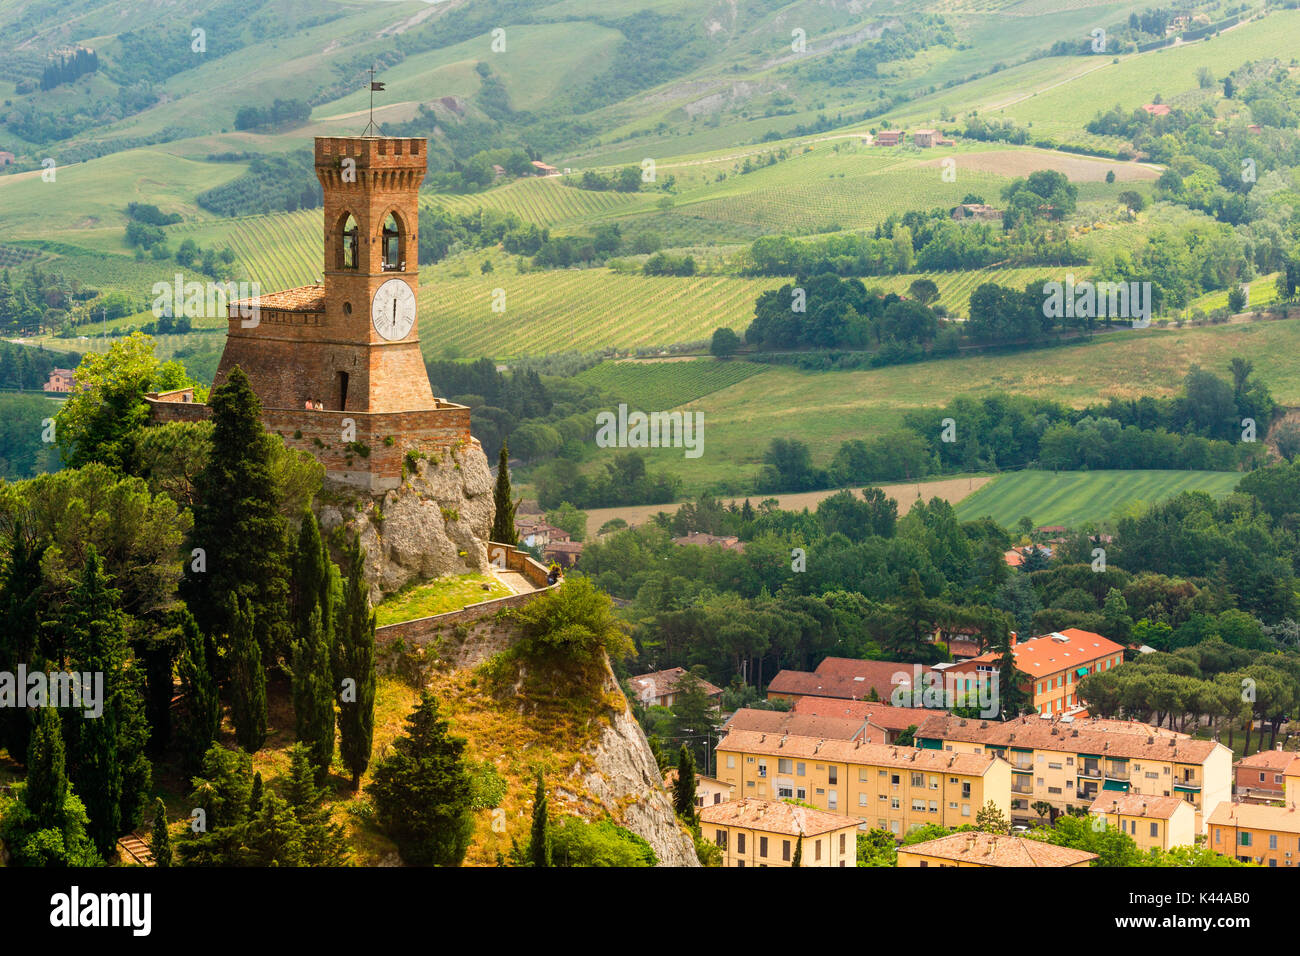 Castle, Brisighella, Province of Ravenna, Emilia Romagna, Italy. Medieval clock tower in village. Stock Photo